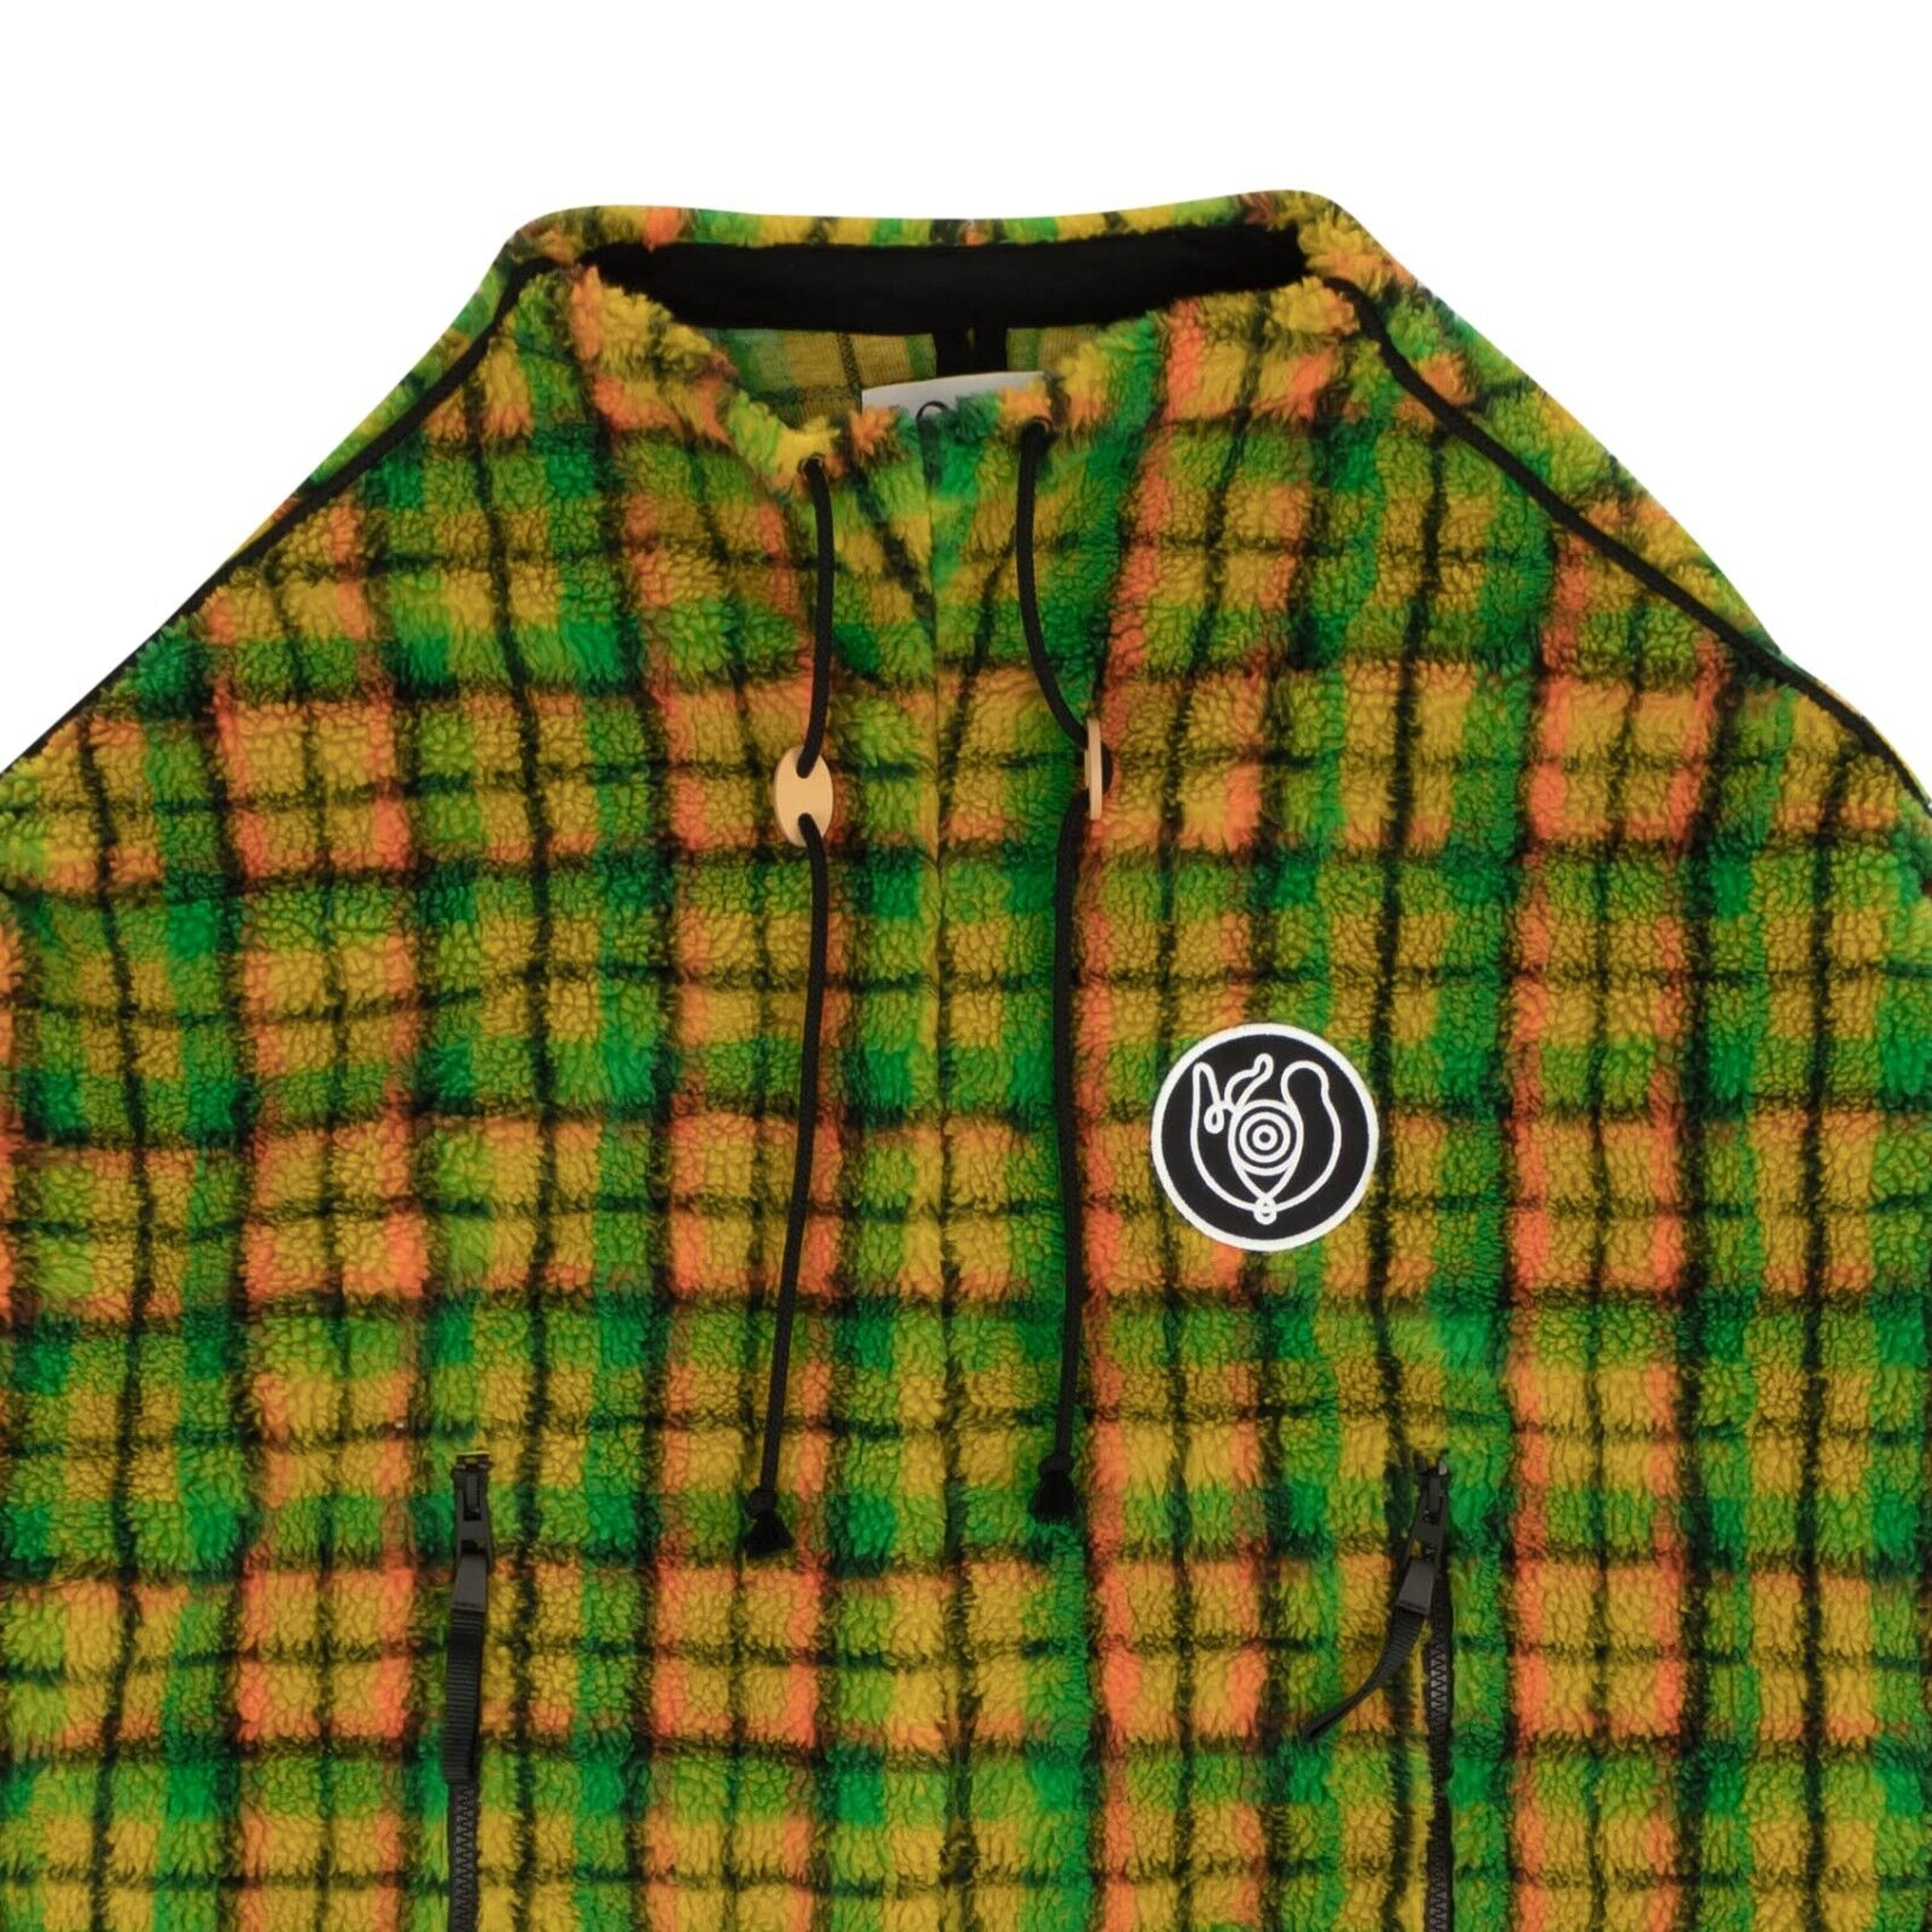 Alternate View 1 of Green Check Multi Fleece Anorak Jacket